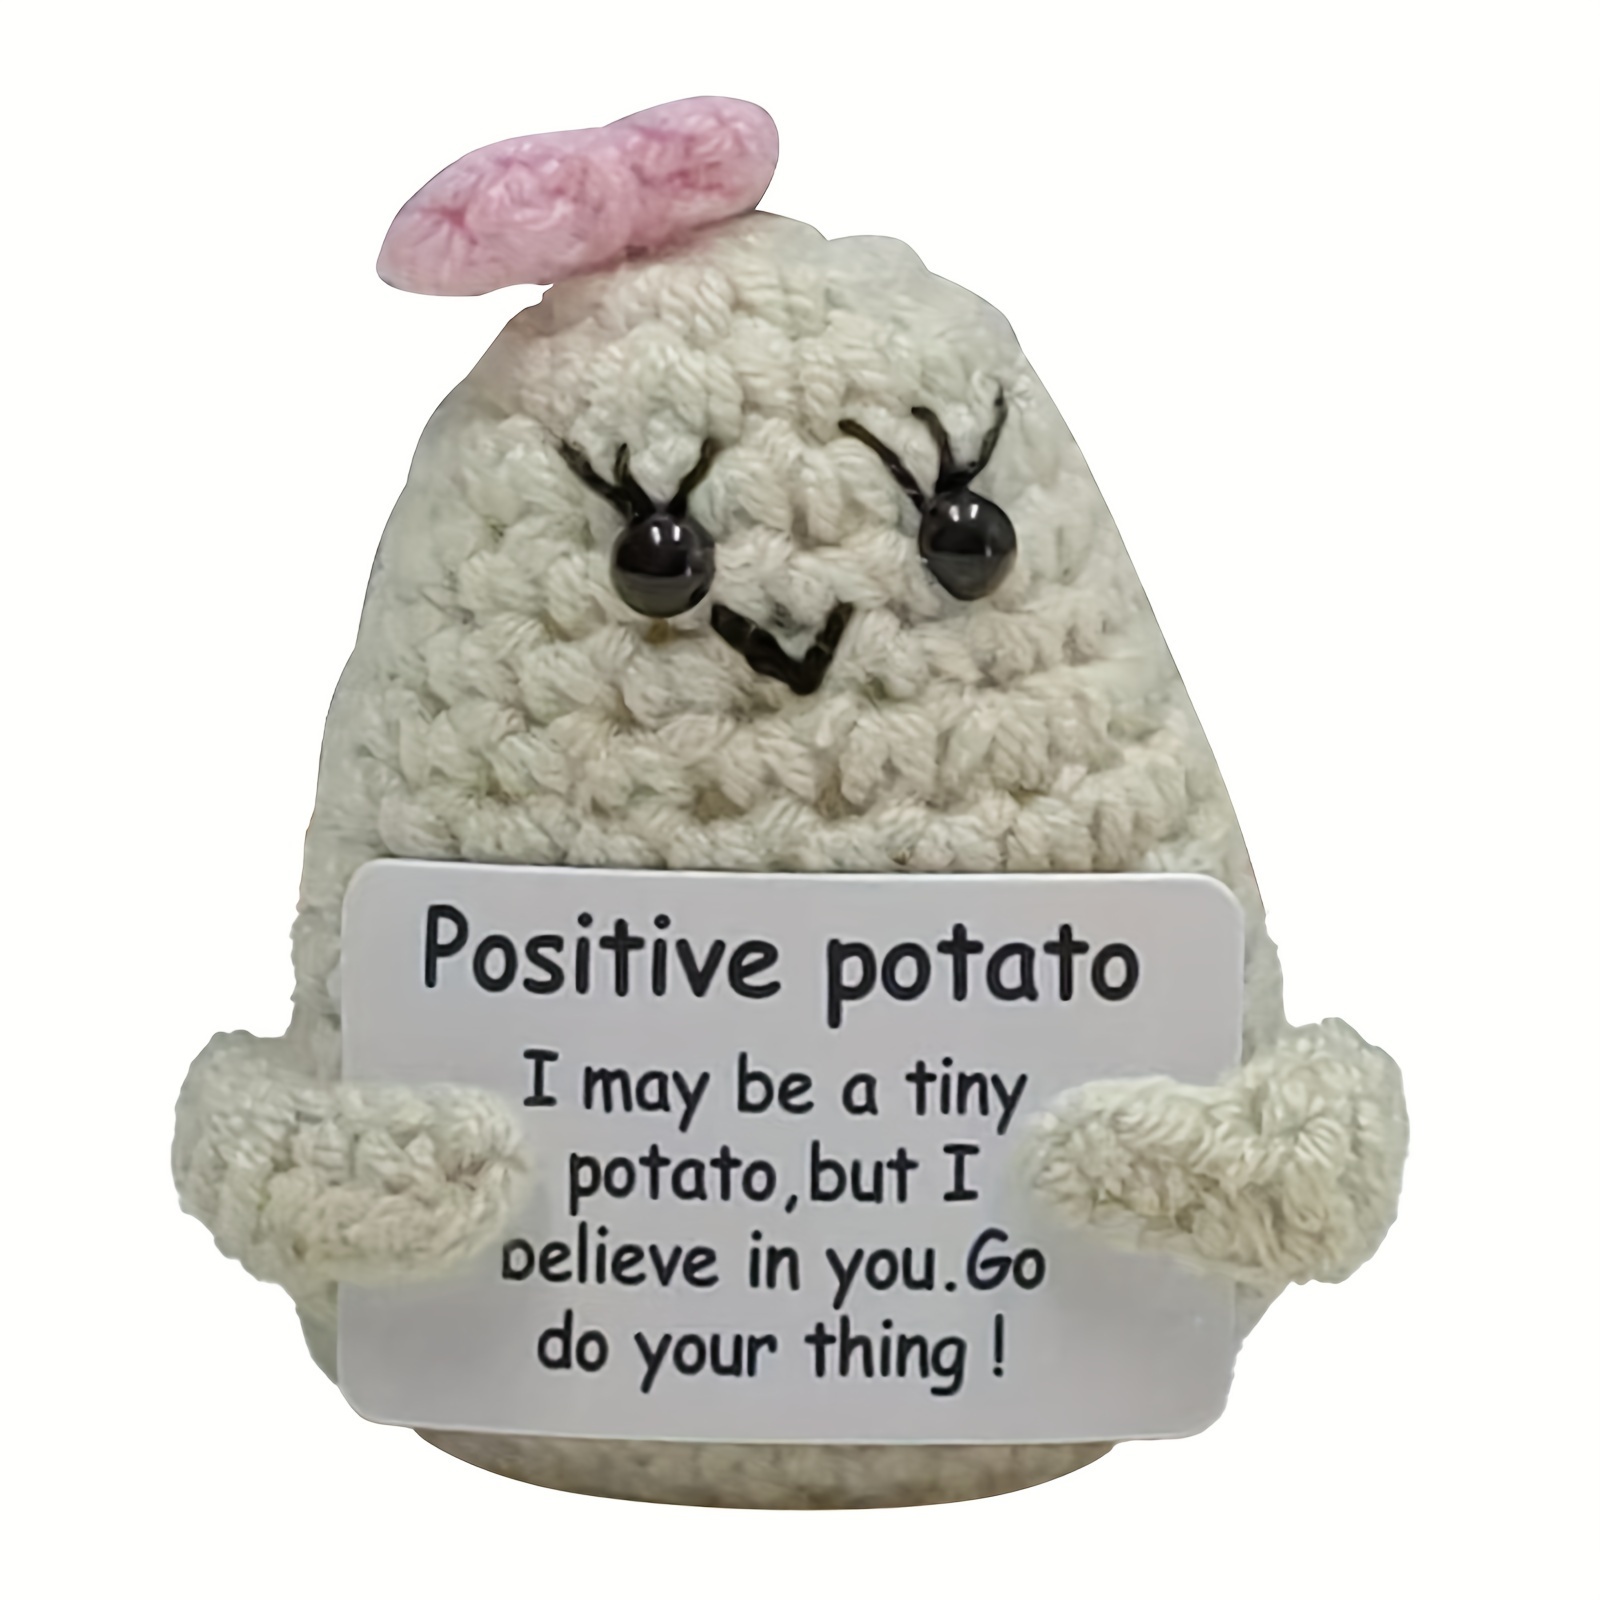 qyqkfly 1 Mini Cute Funny Positive Life Potato, Positive Potato 